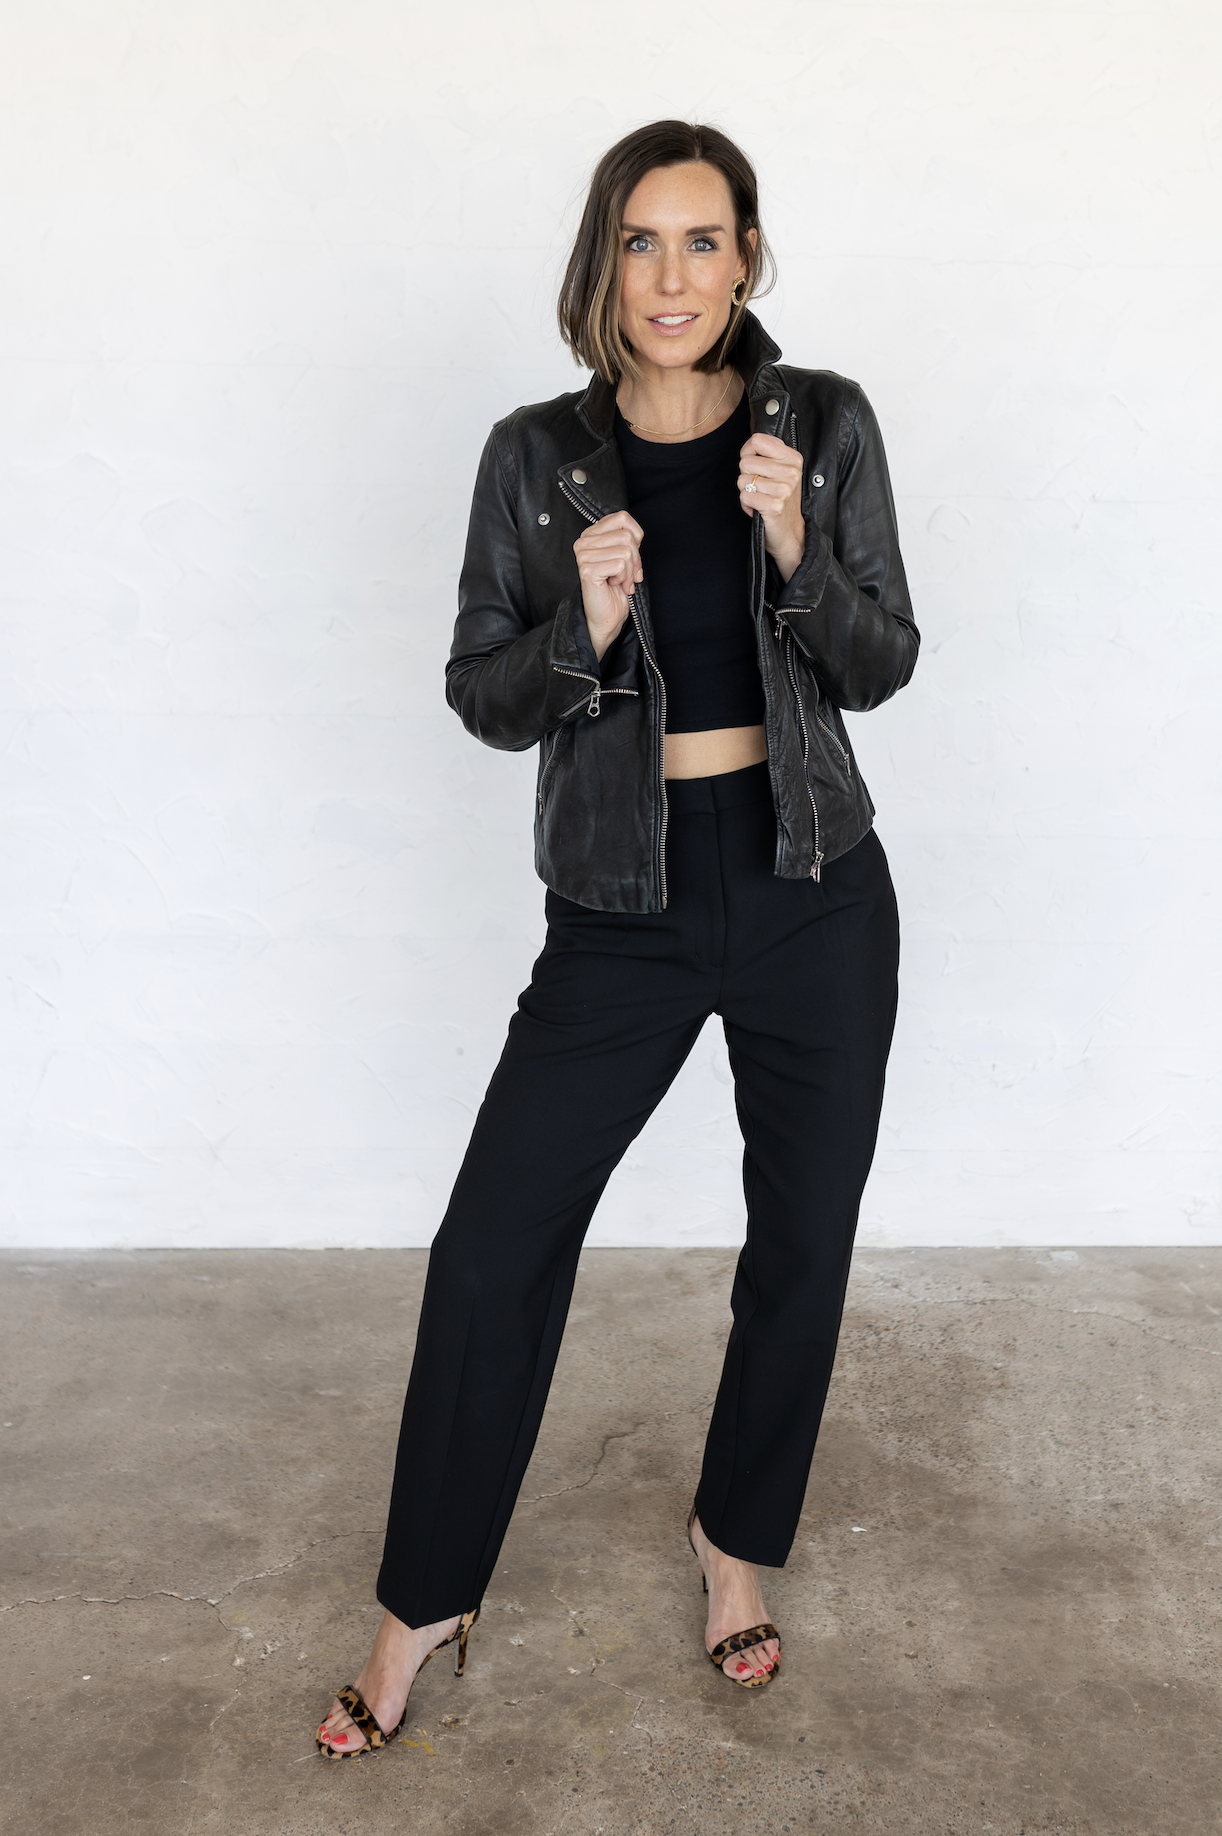 Anne Liebman, wearing black leather moto jacket, smiling